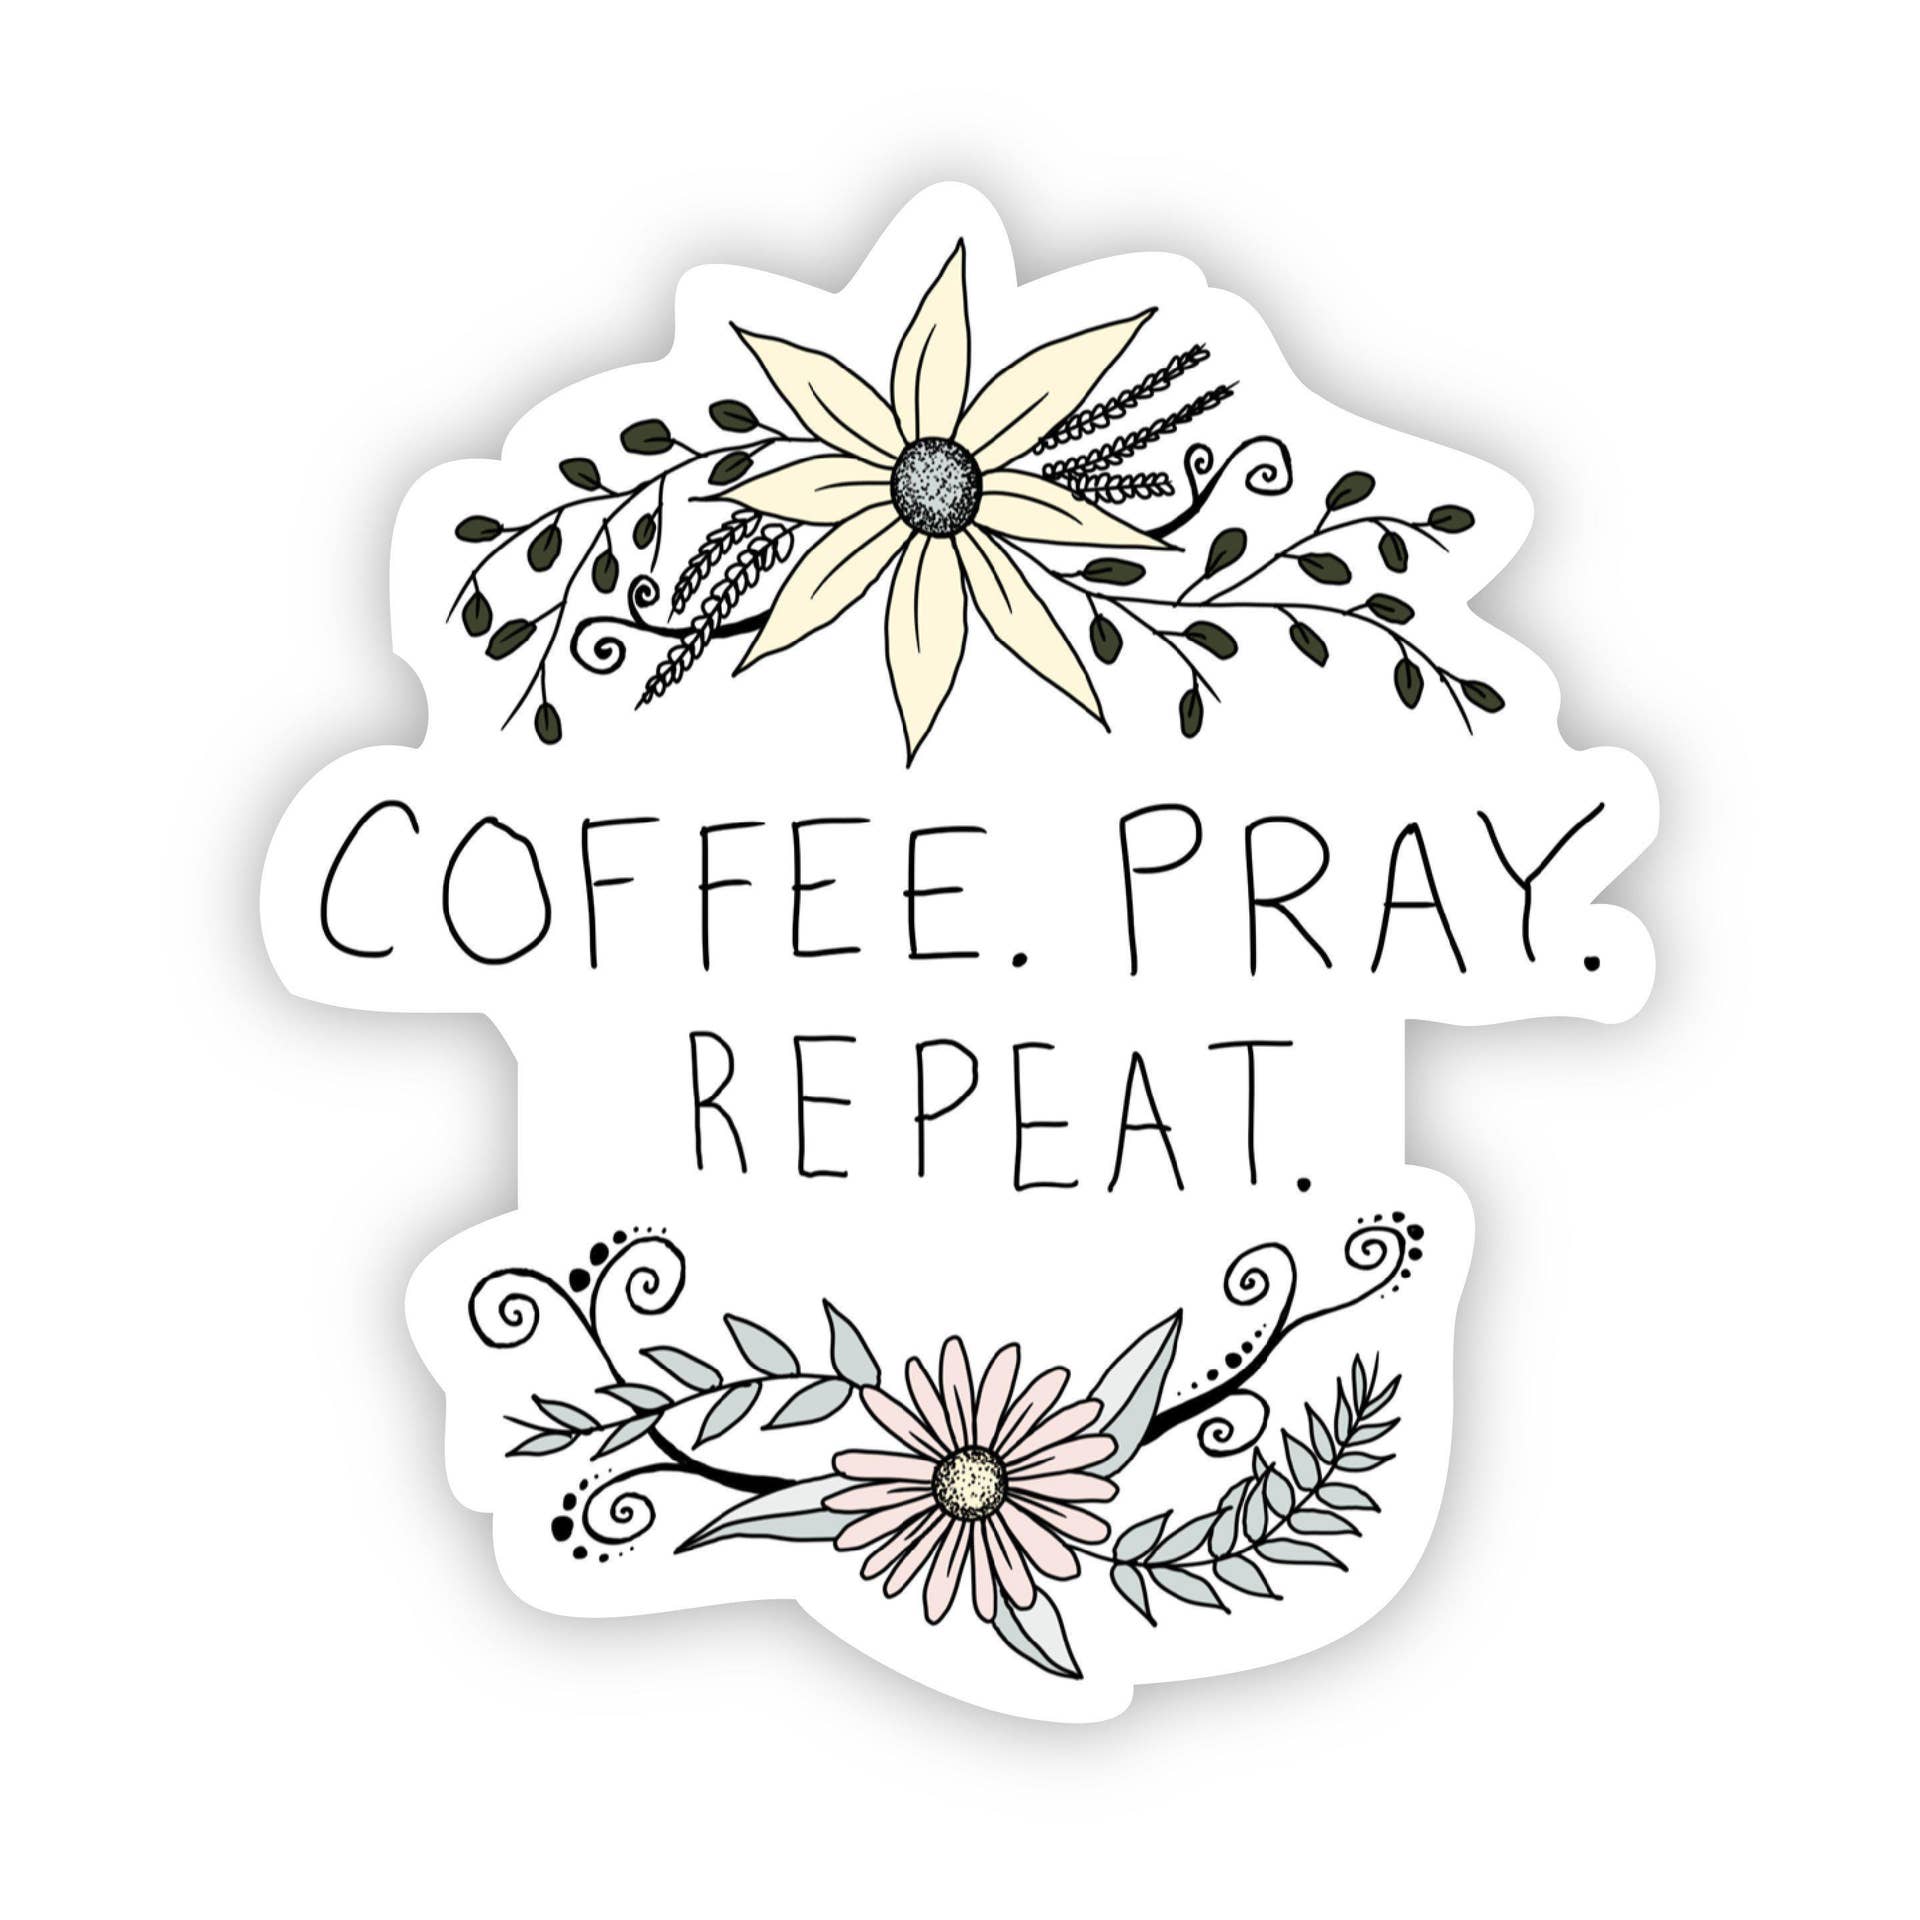 Coffee Pray Repeat Sticker